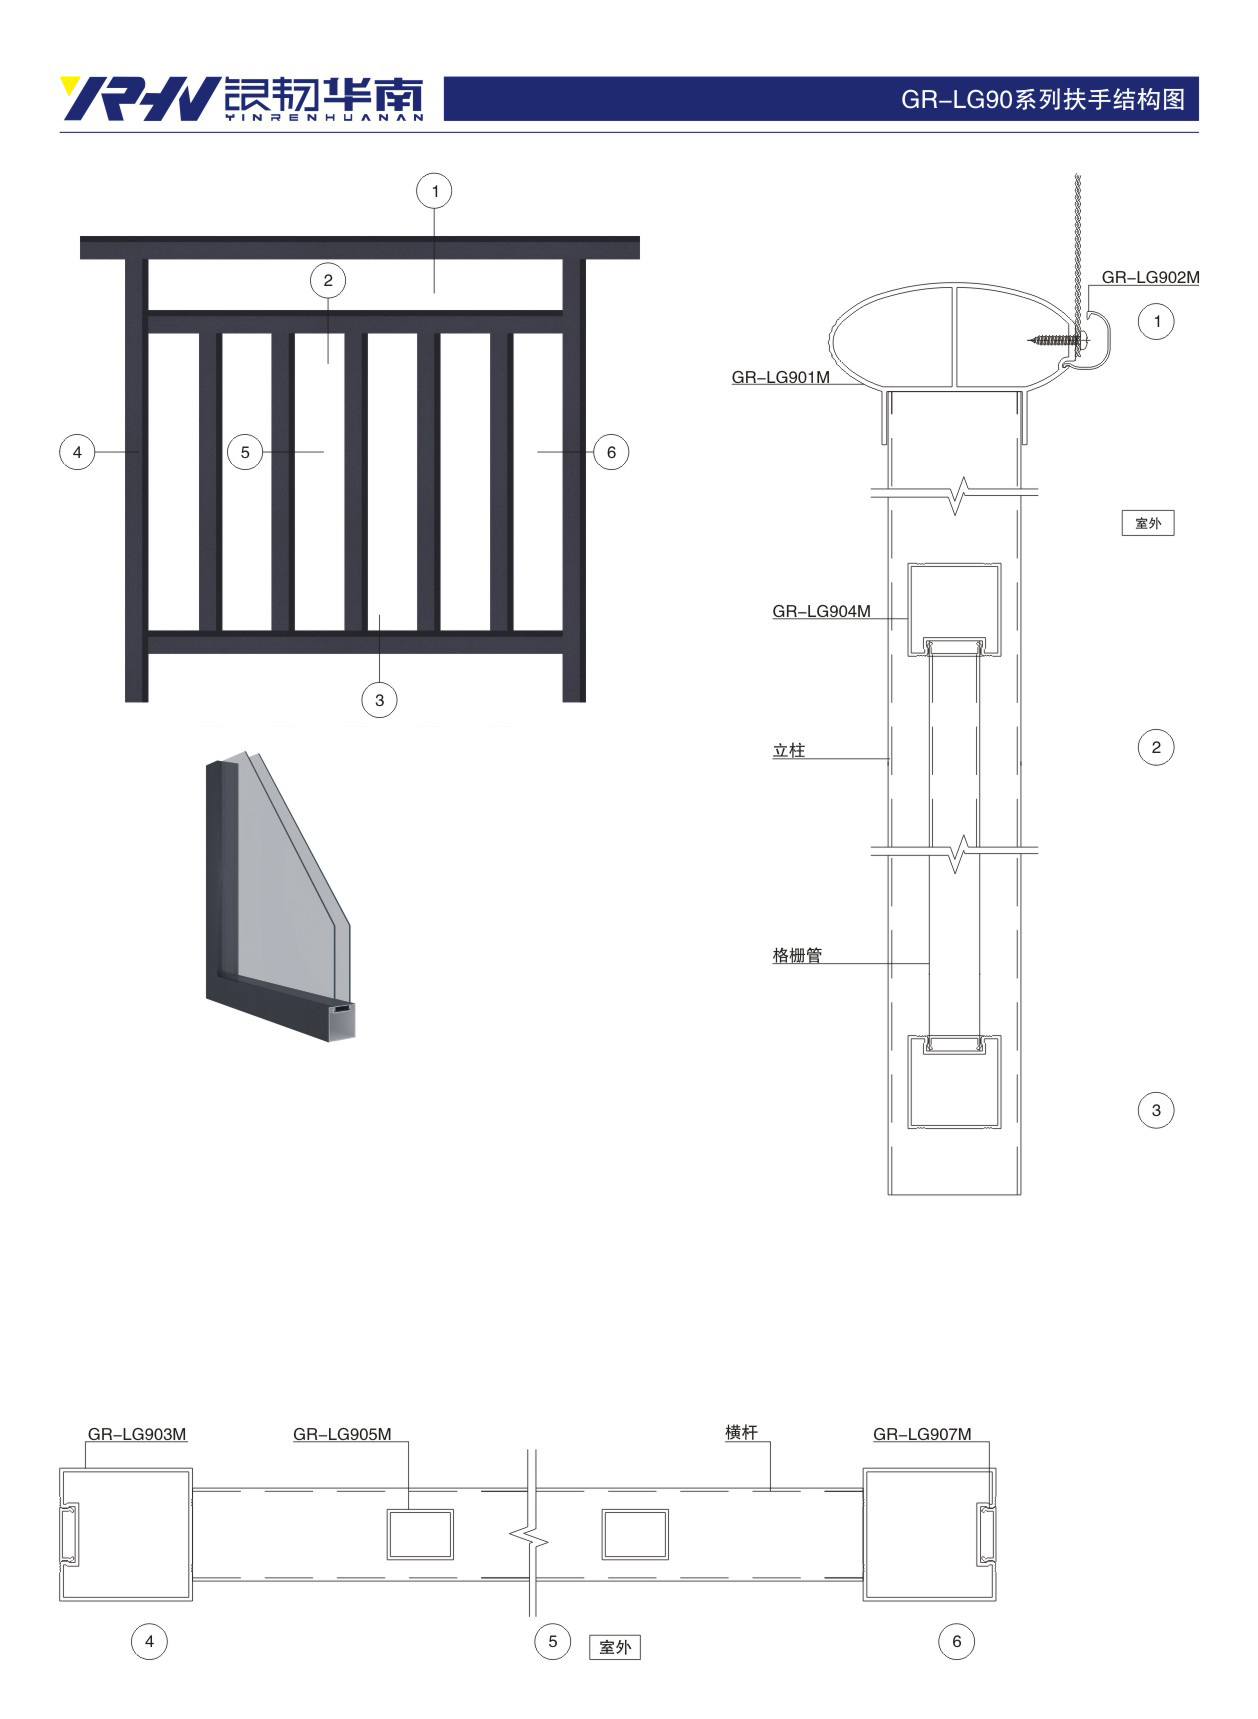 GR-LG90 handrail series